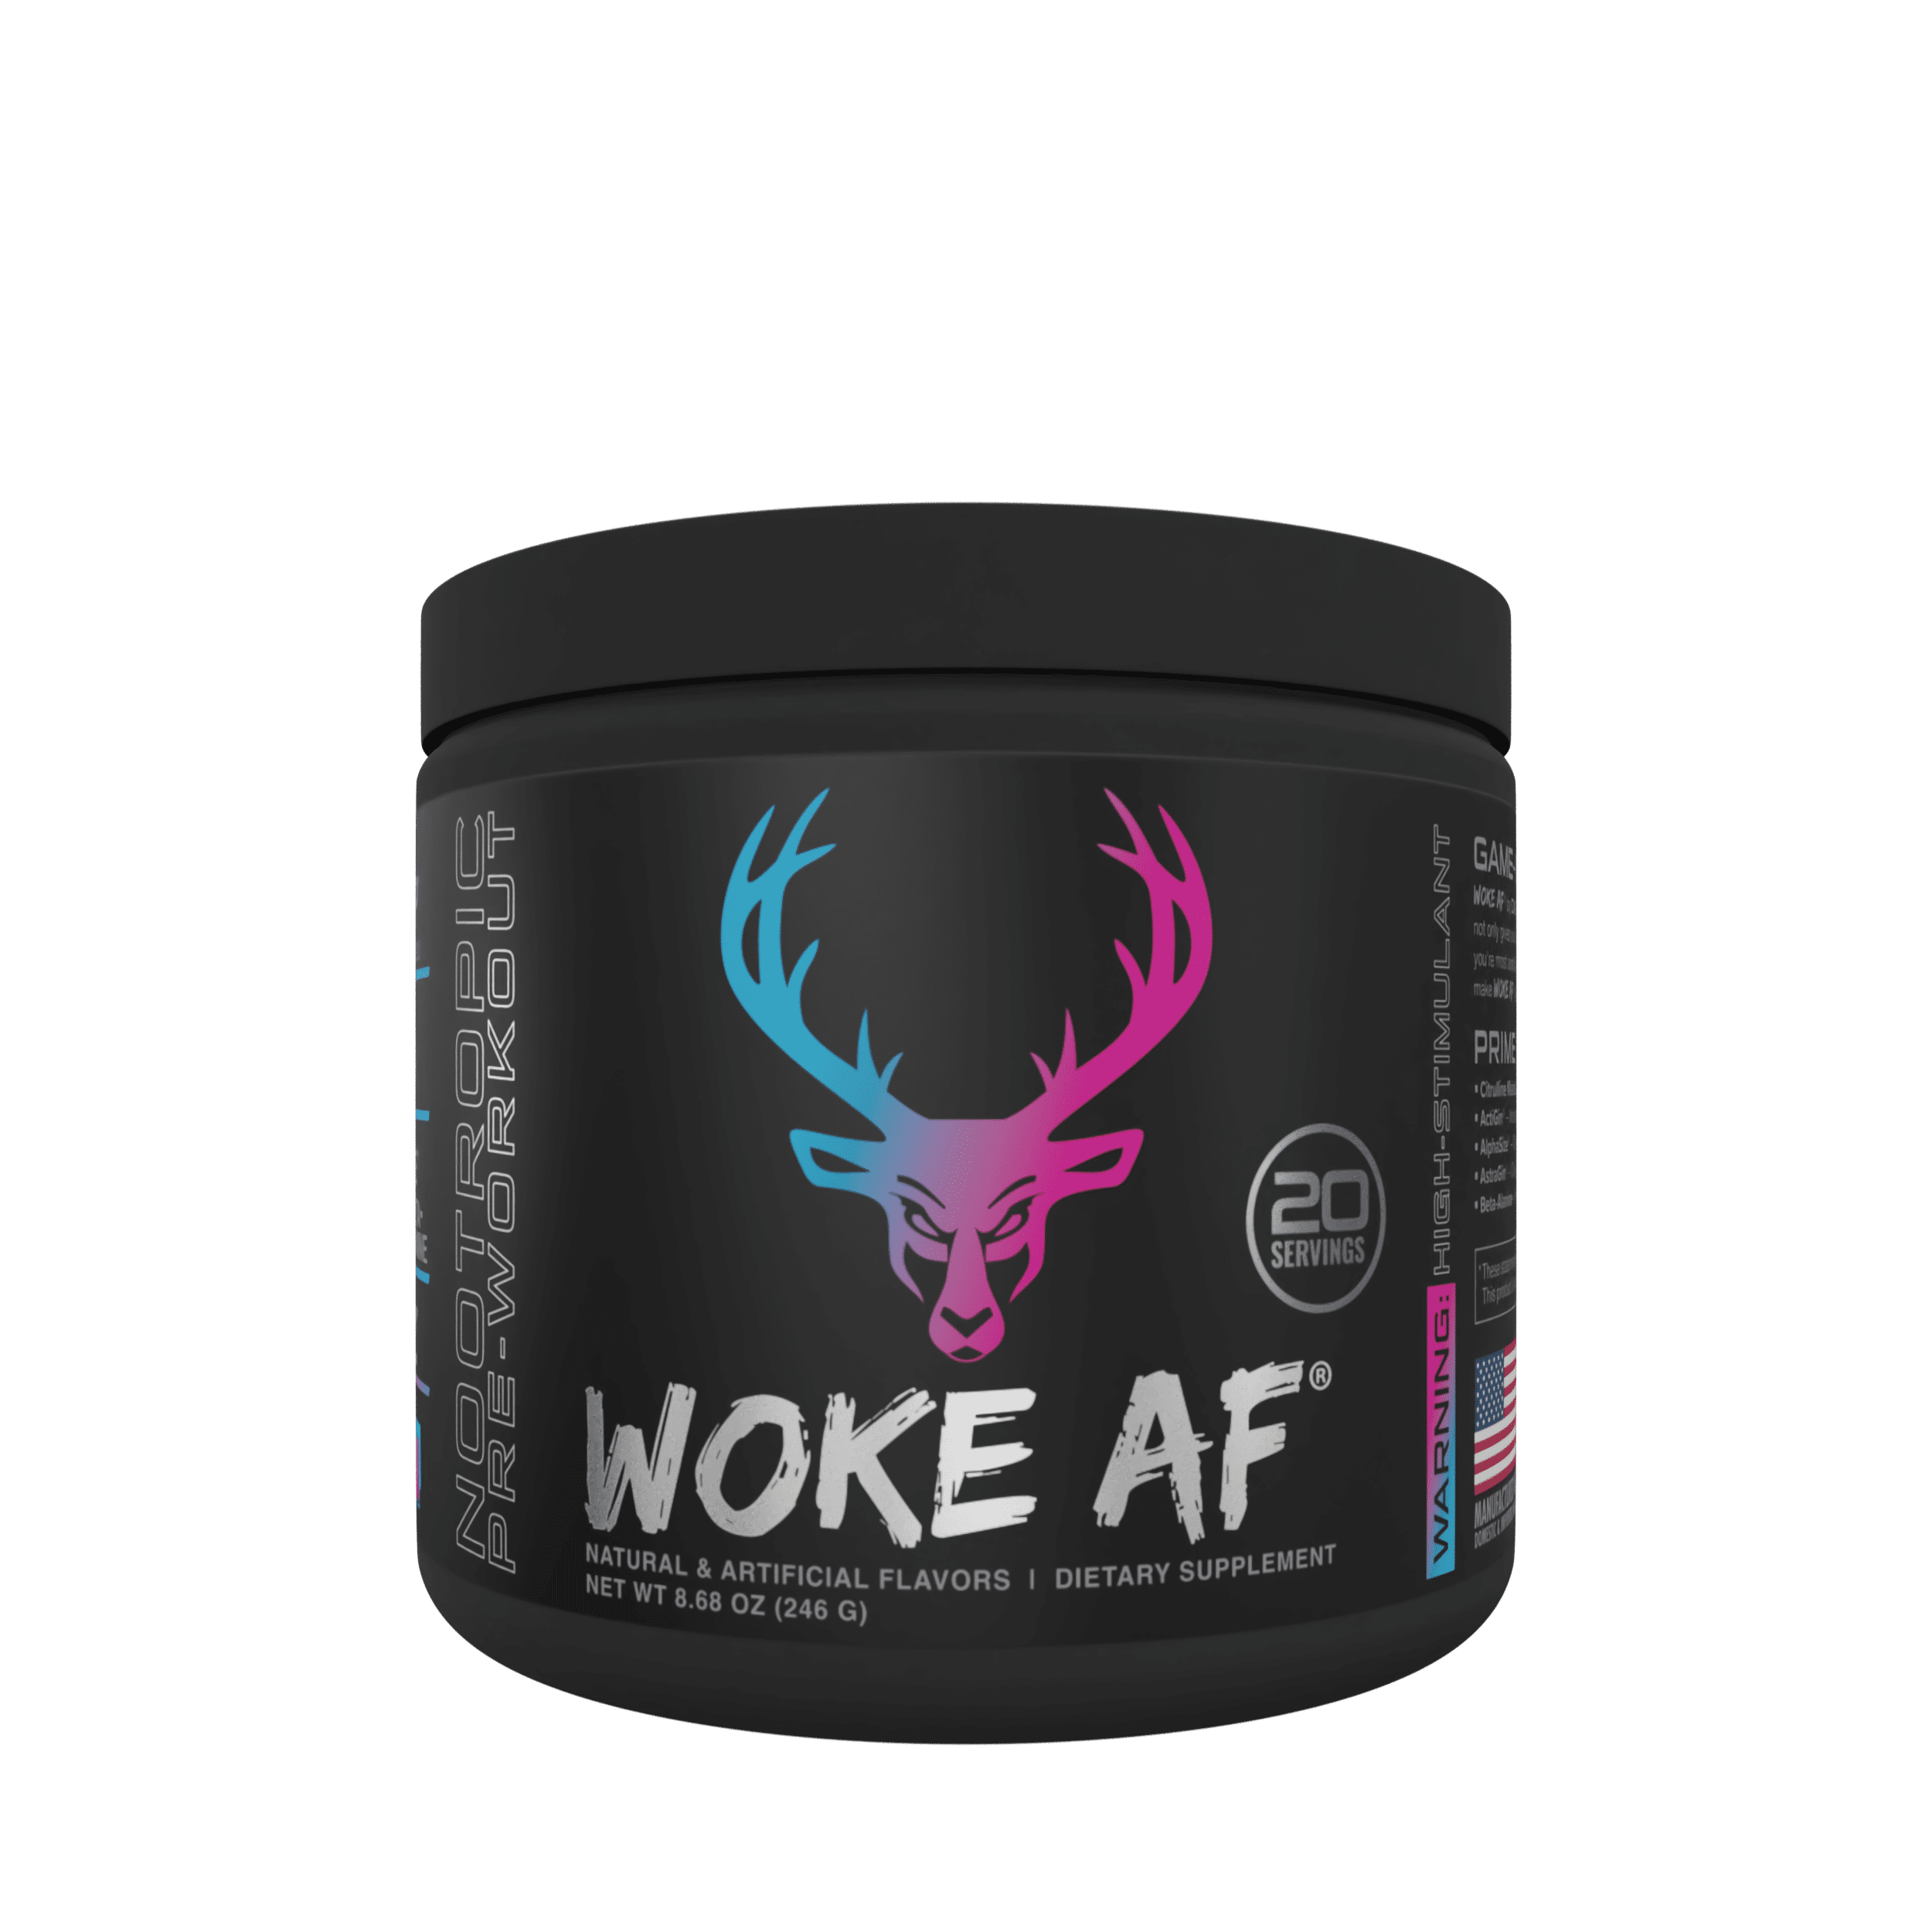 Bucked Up Woke AF Pre-Workout Powder, Increased Energy, Miami, 333mg Caffeine, 20 Servings